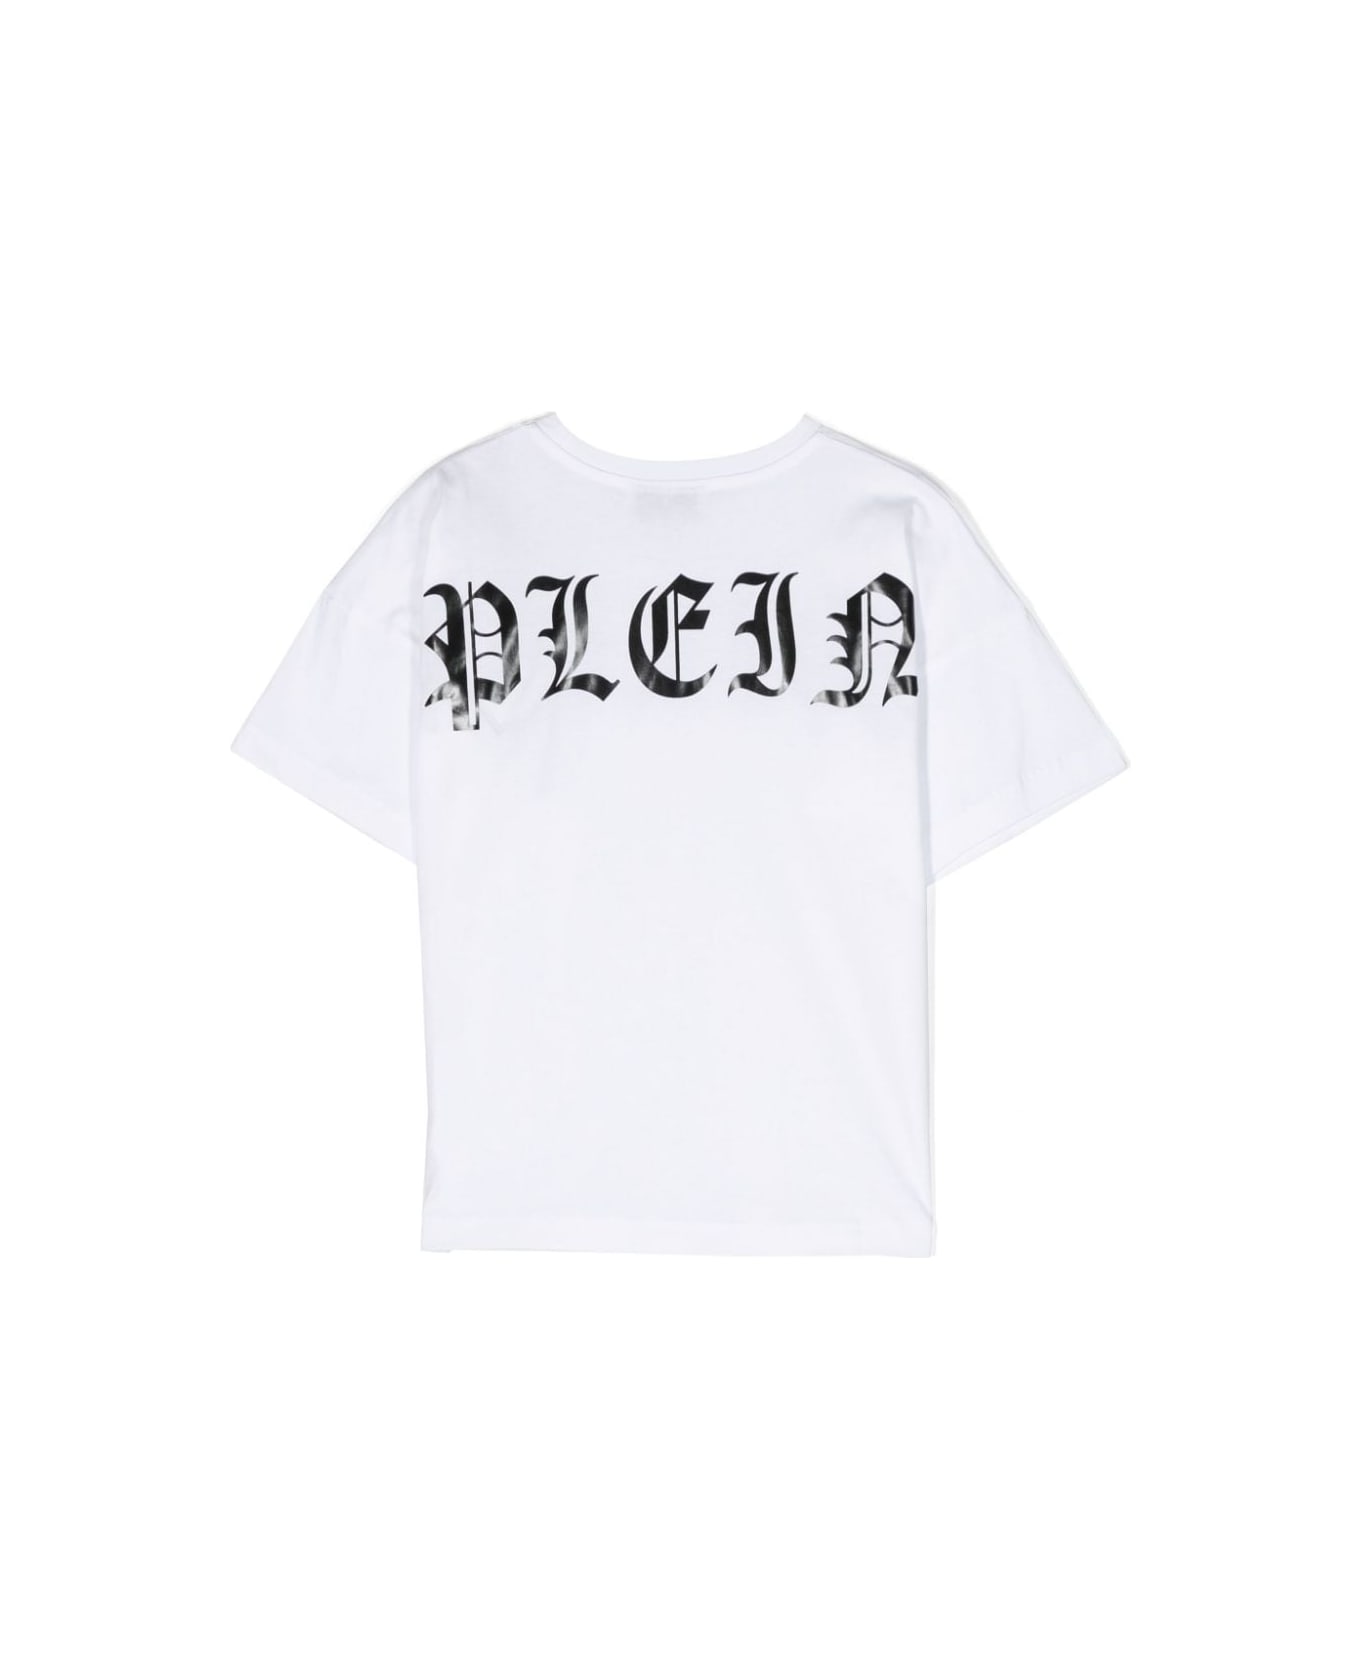 Philipp Plein Junior Philipp Plein T-shirt Bianca In Jersey Di Cotone Bambino - Bianco